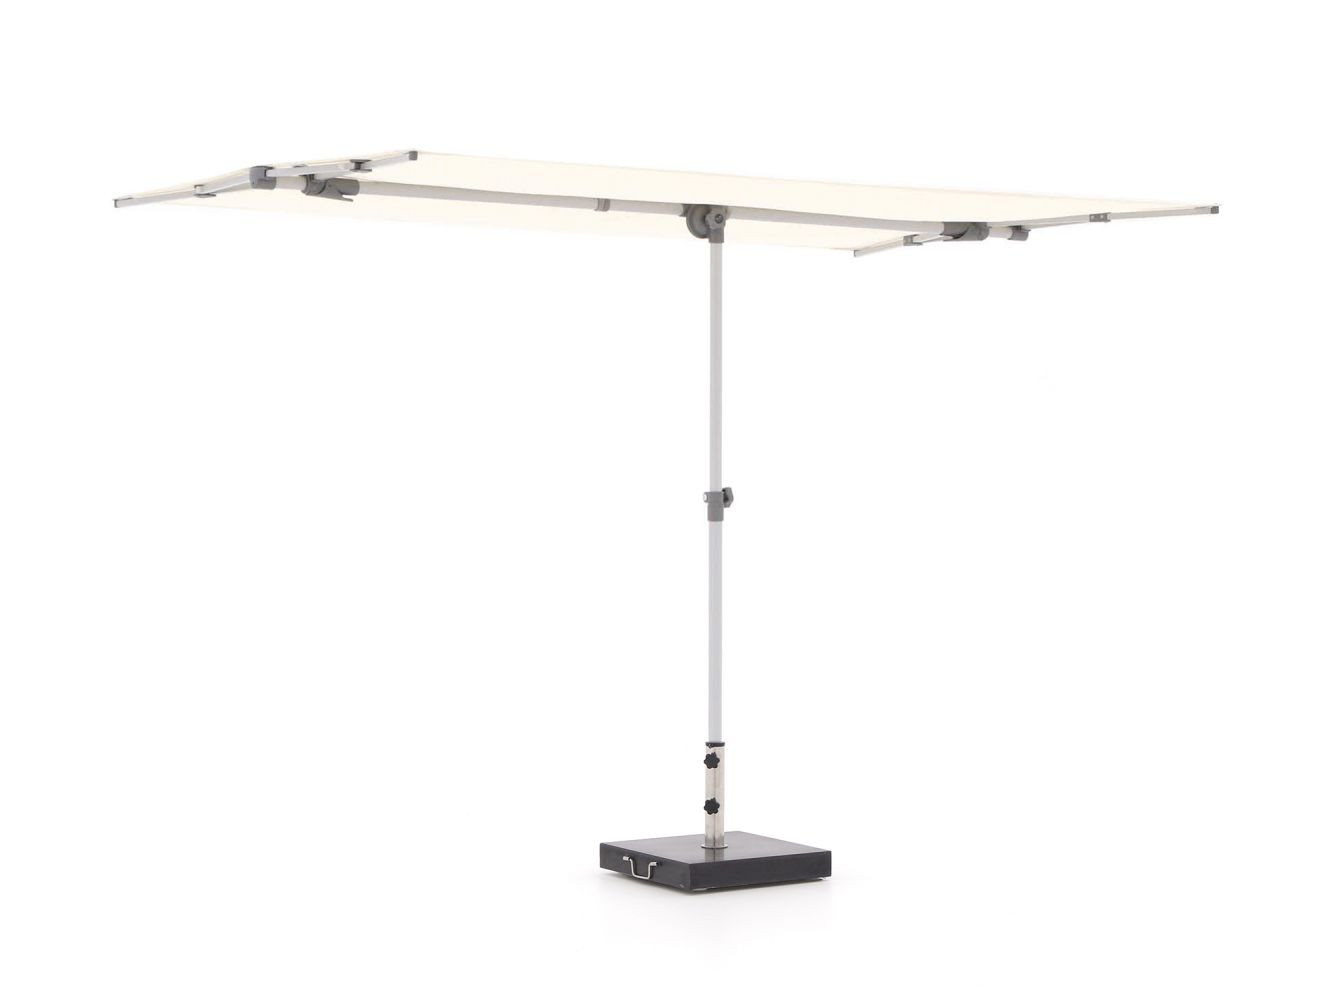 Suncomfort Flex-Roof parasol 210x150cm - Laagste prijsgarantie!